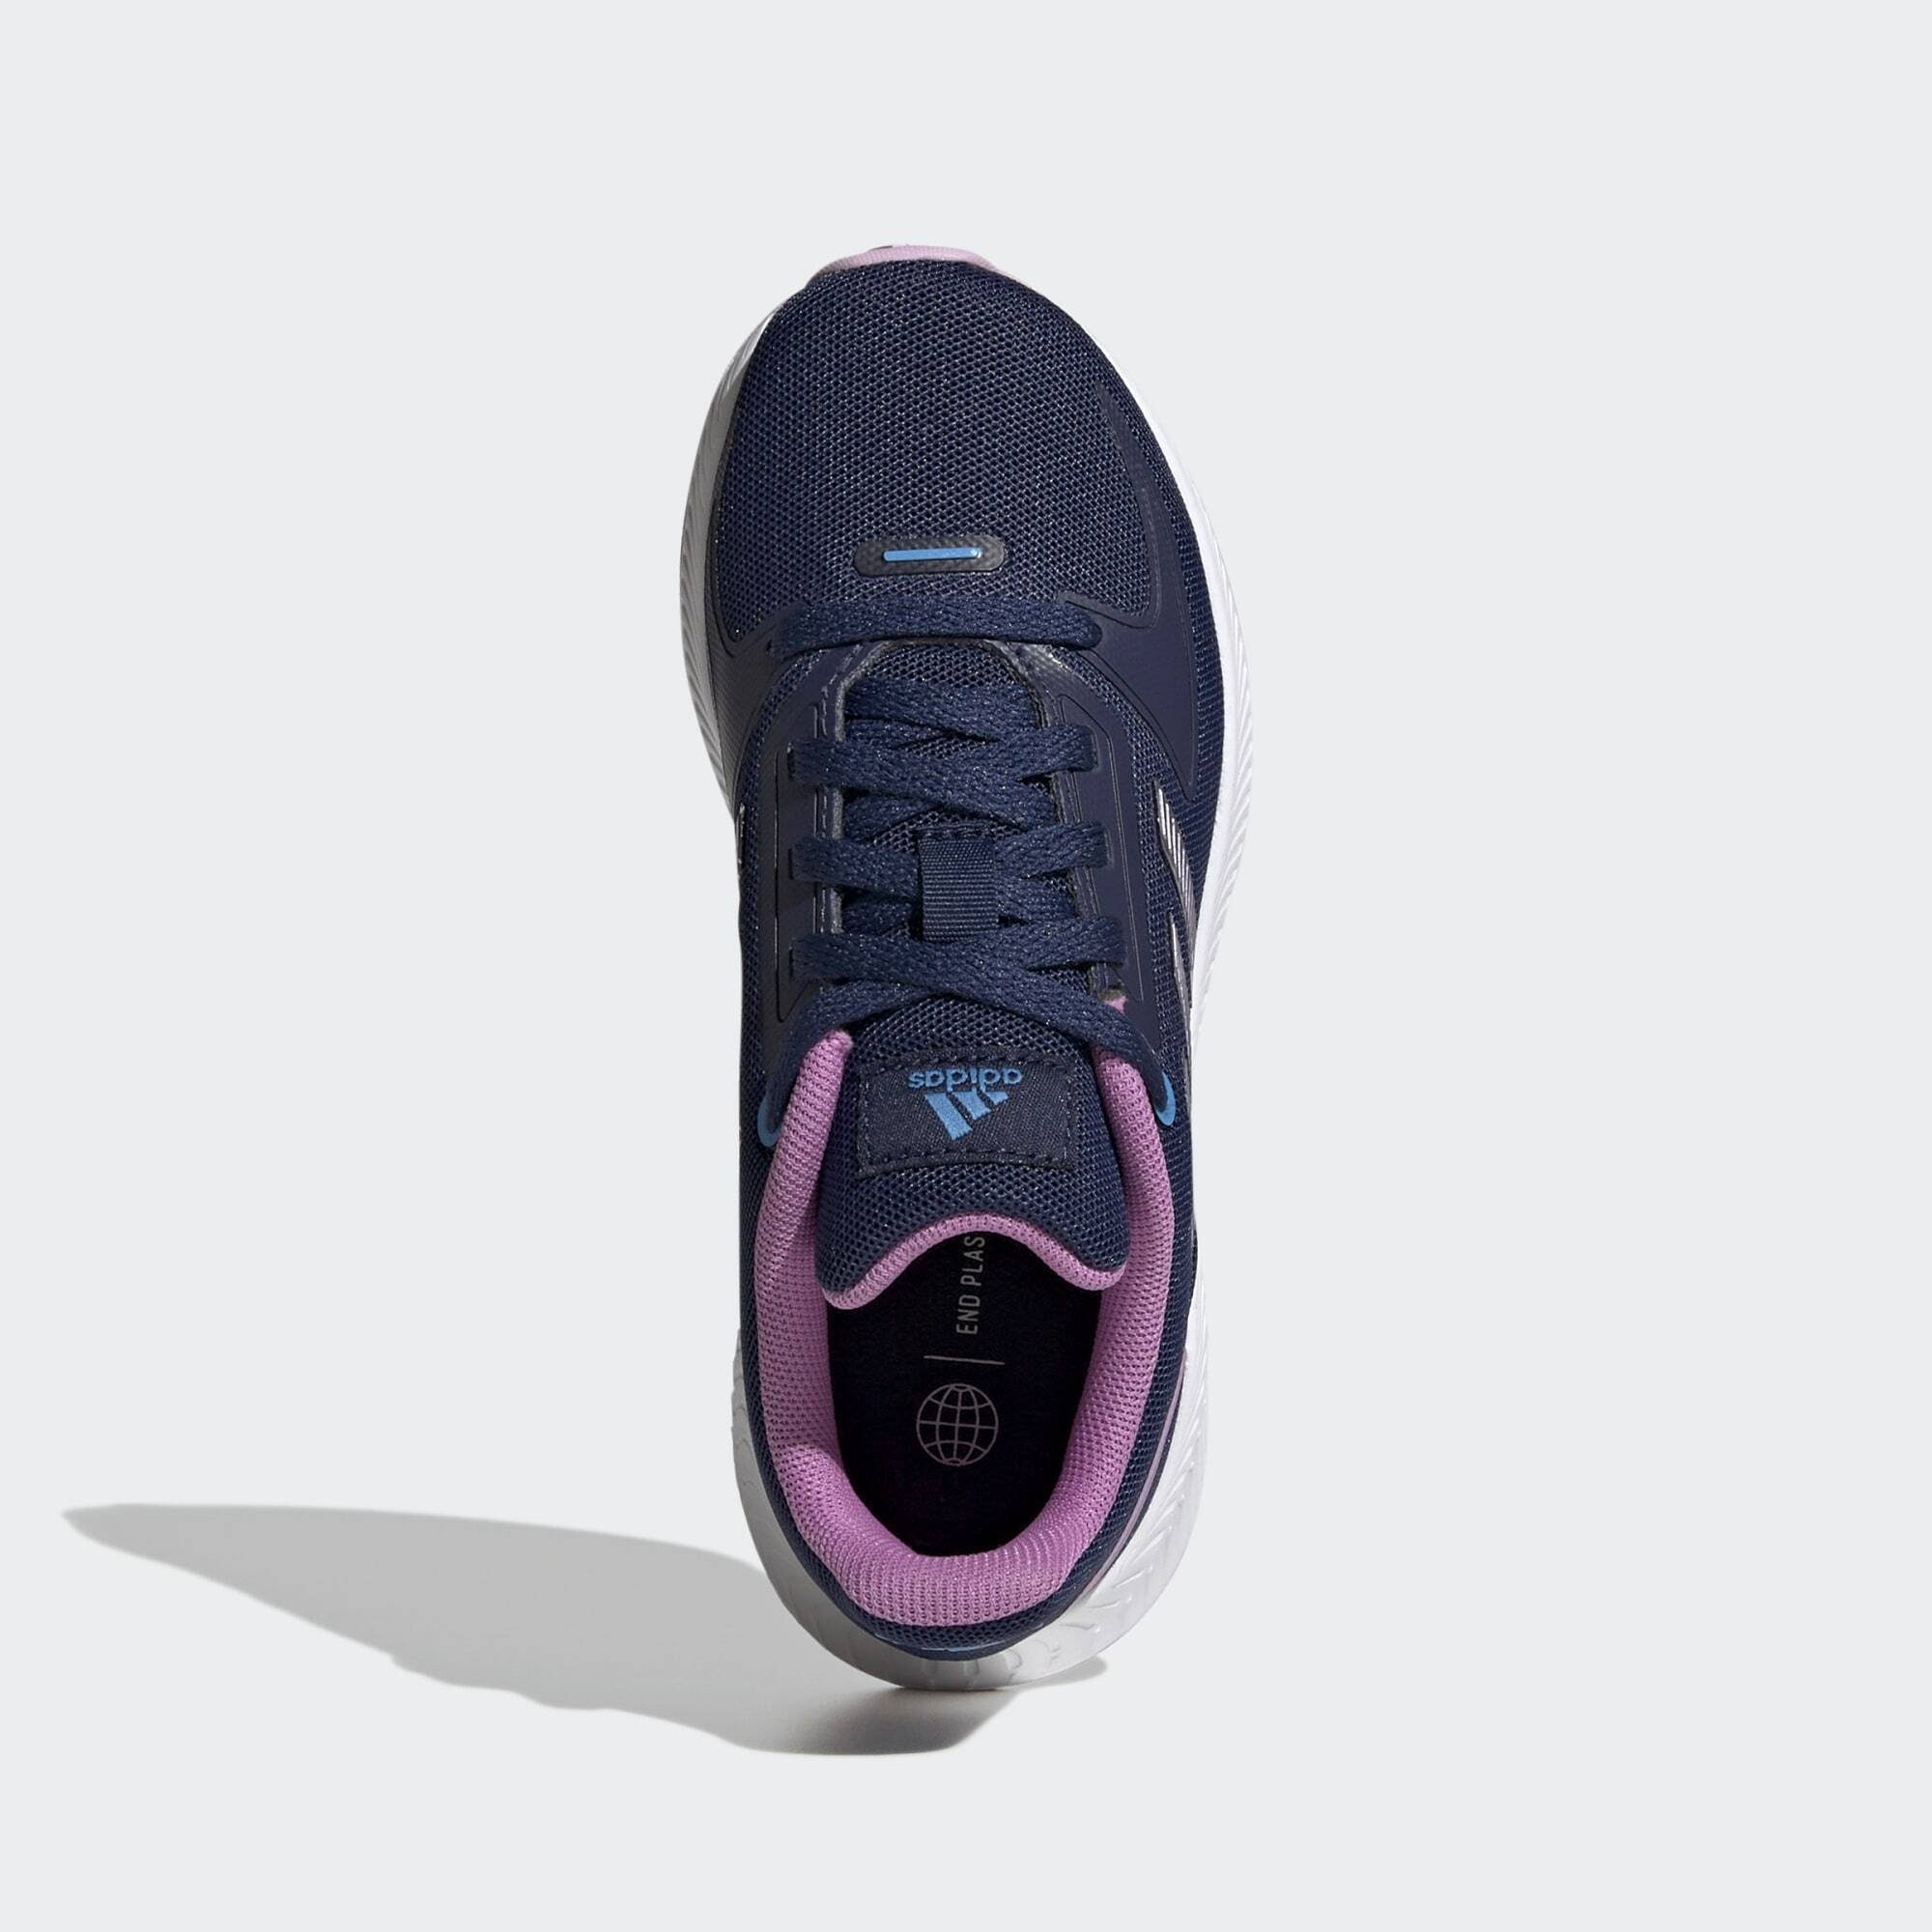 LAUFSCHUH 2.0 Blue / Pulse adidas Matt Sportswear Purple RUNFALCON Sneaker Met. Lilac / Dark